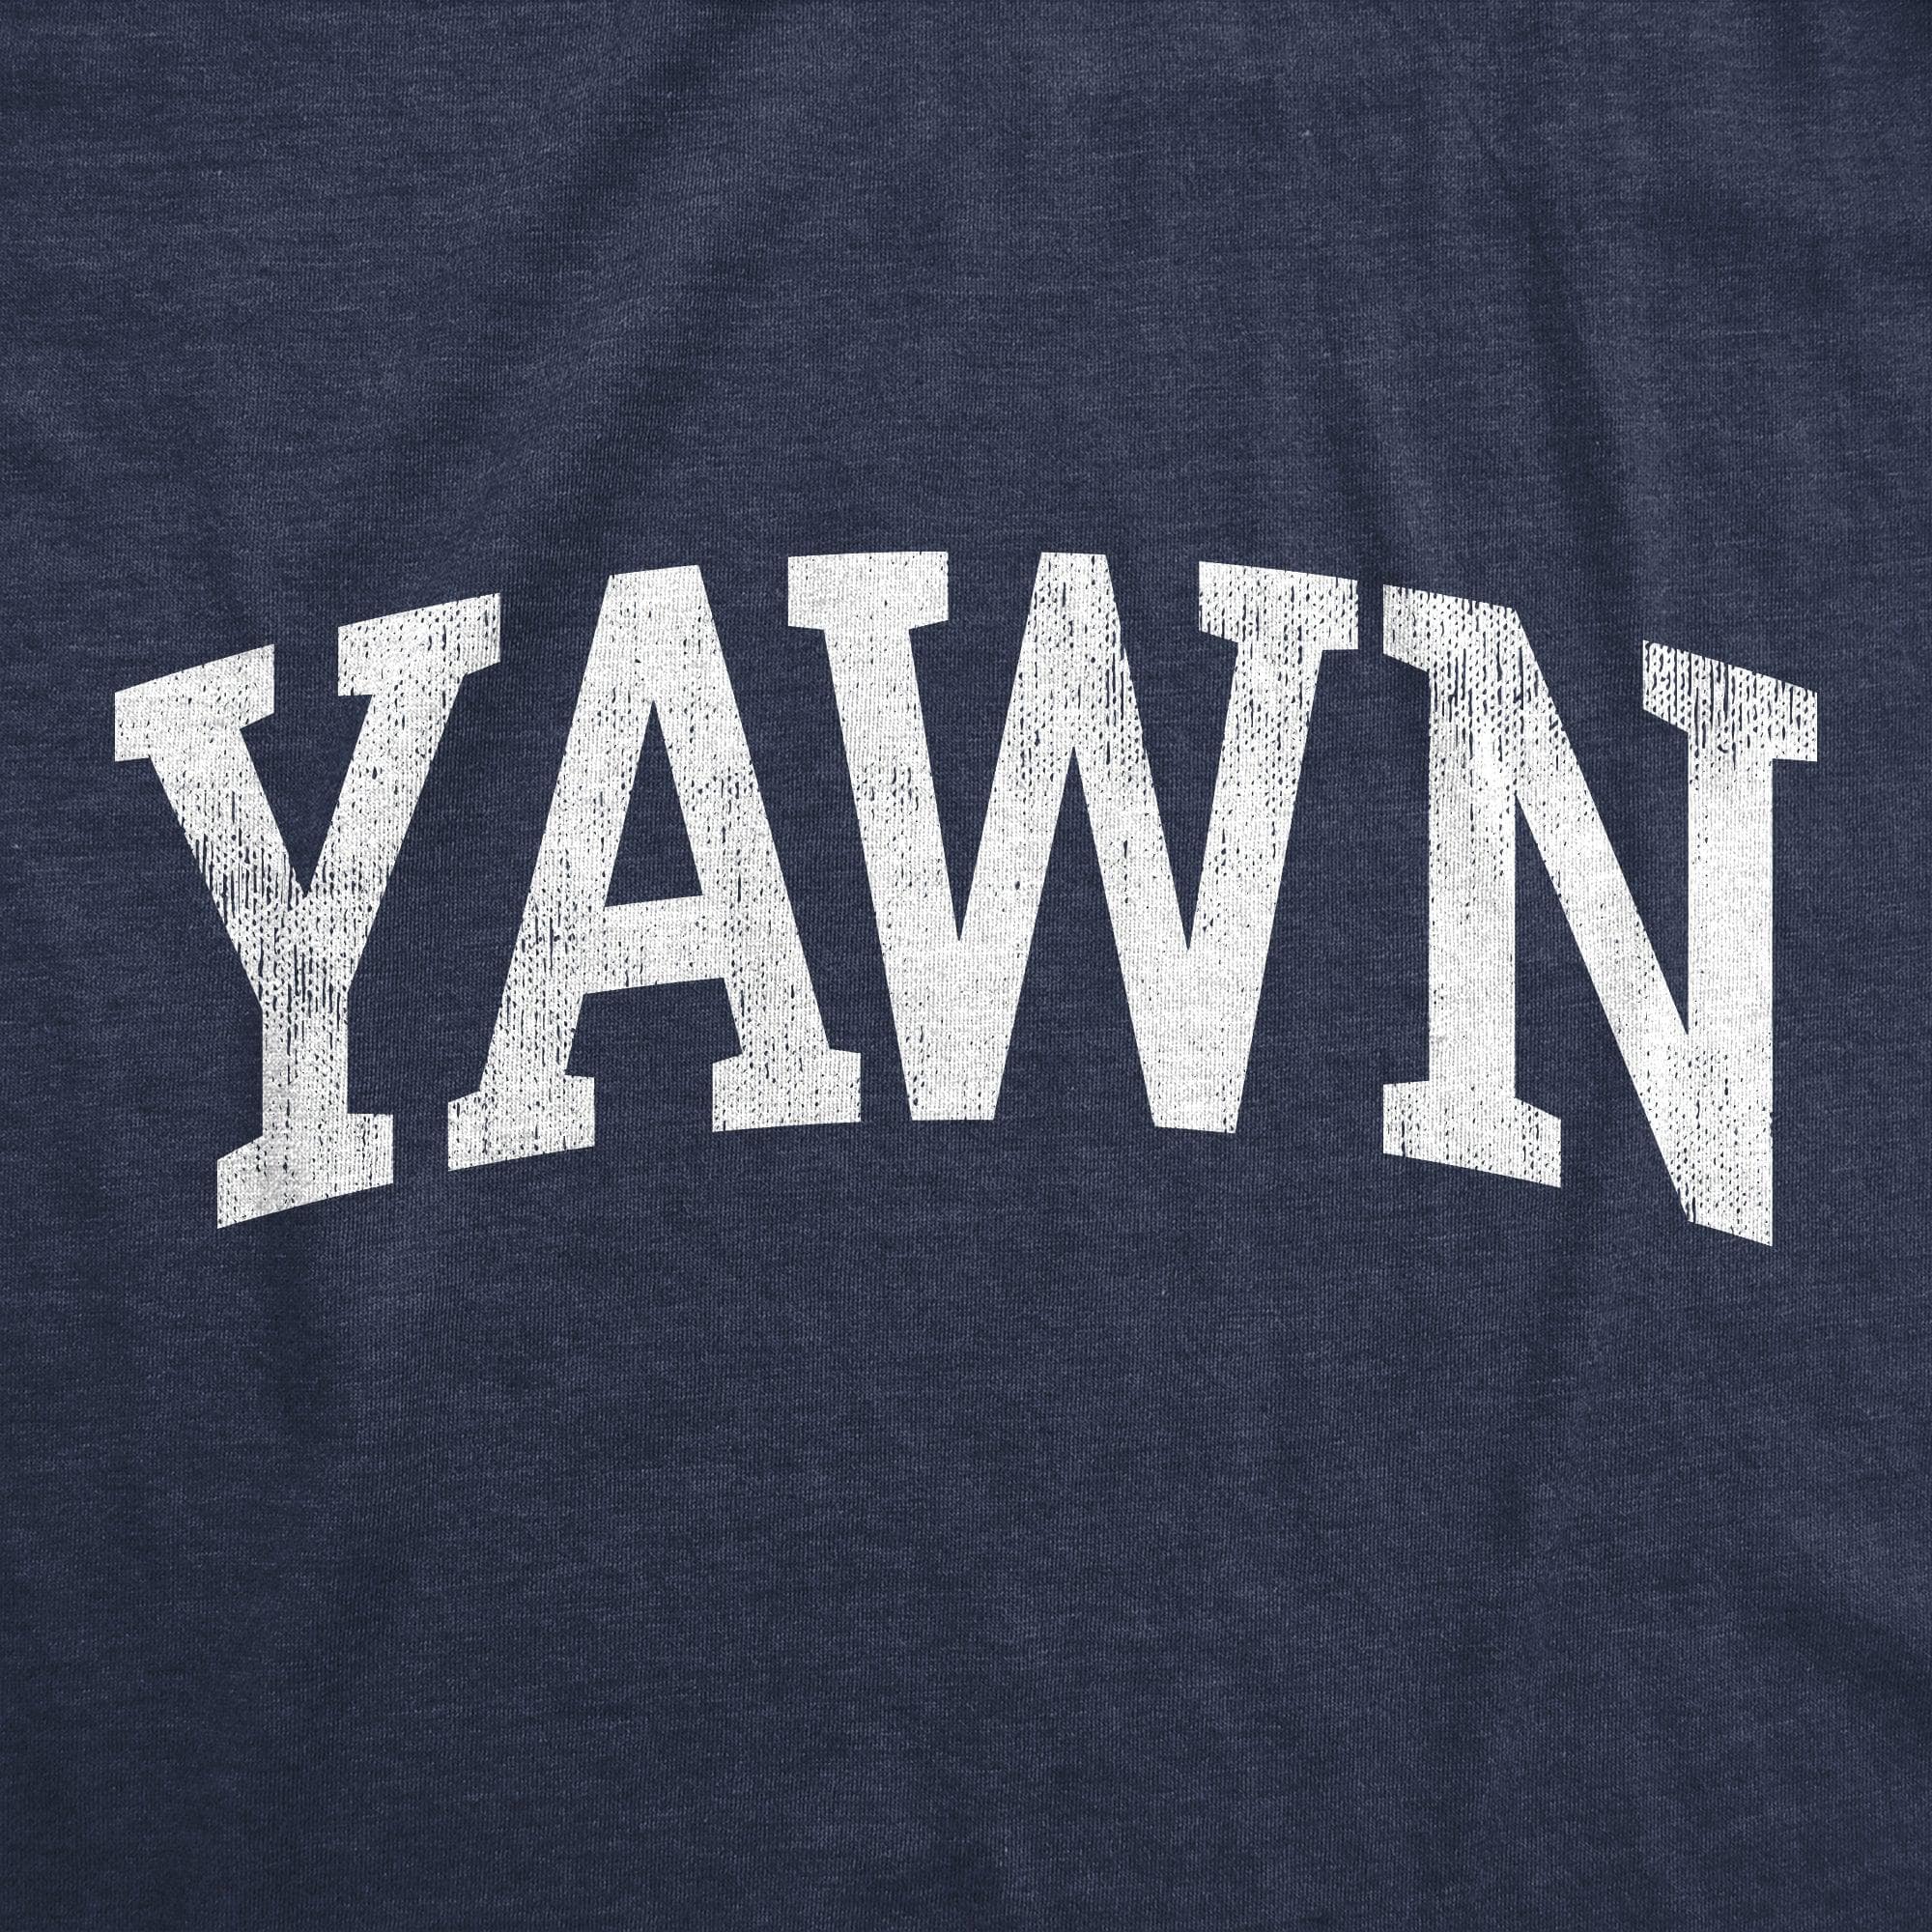 Yawn Men's Tshirt  -  Crazy Dog T-Shirts